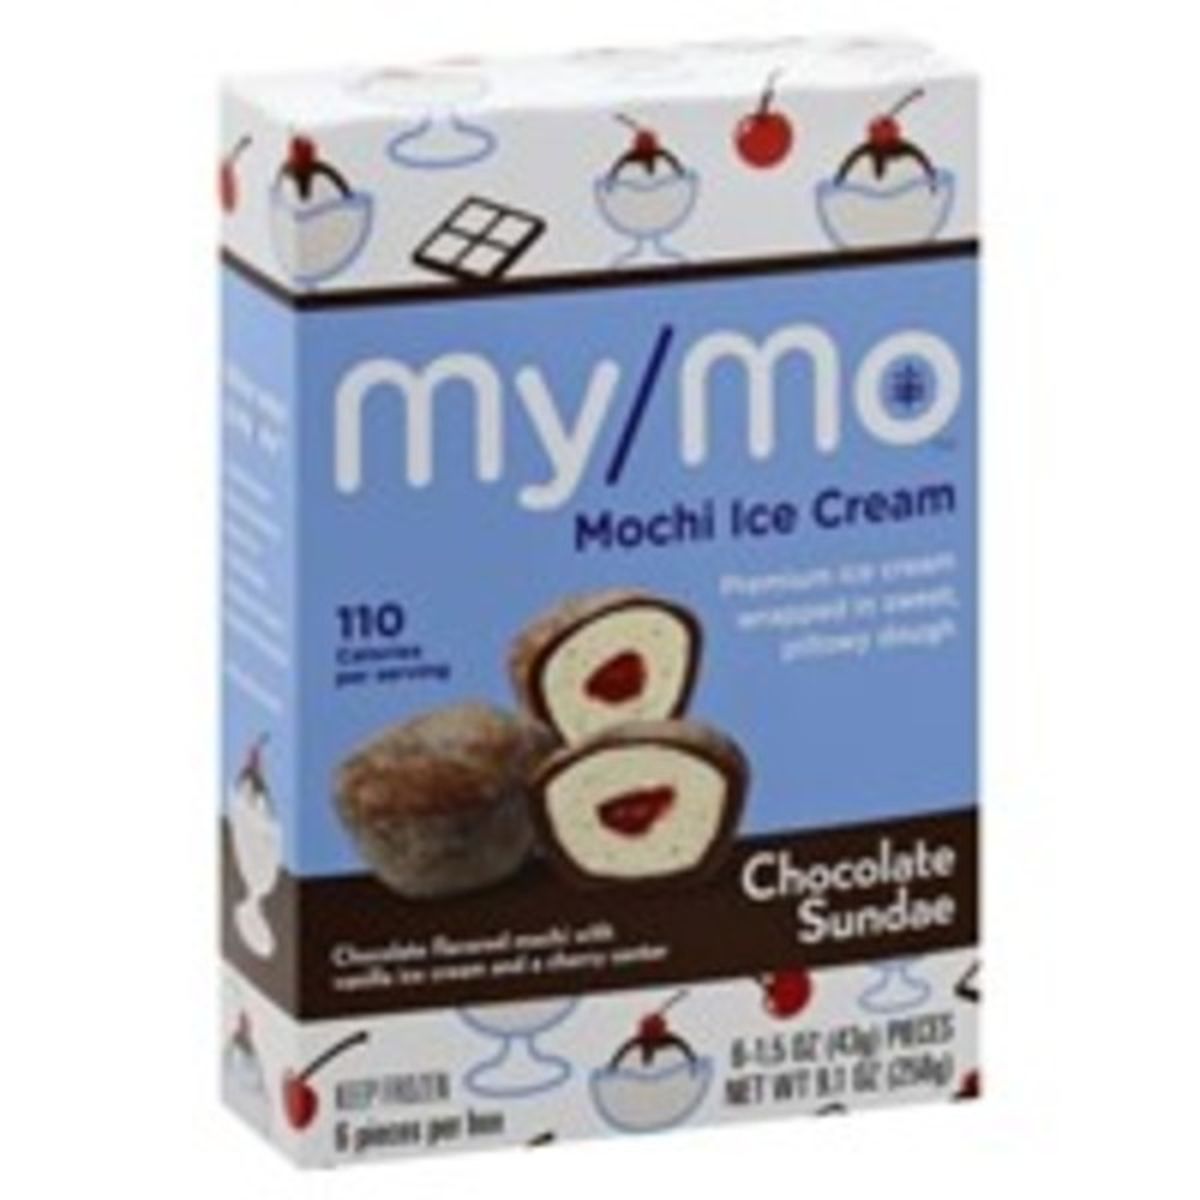 Calories in My Mo Ice Cream, Mochi, Chocolate Sundae